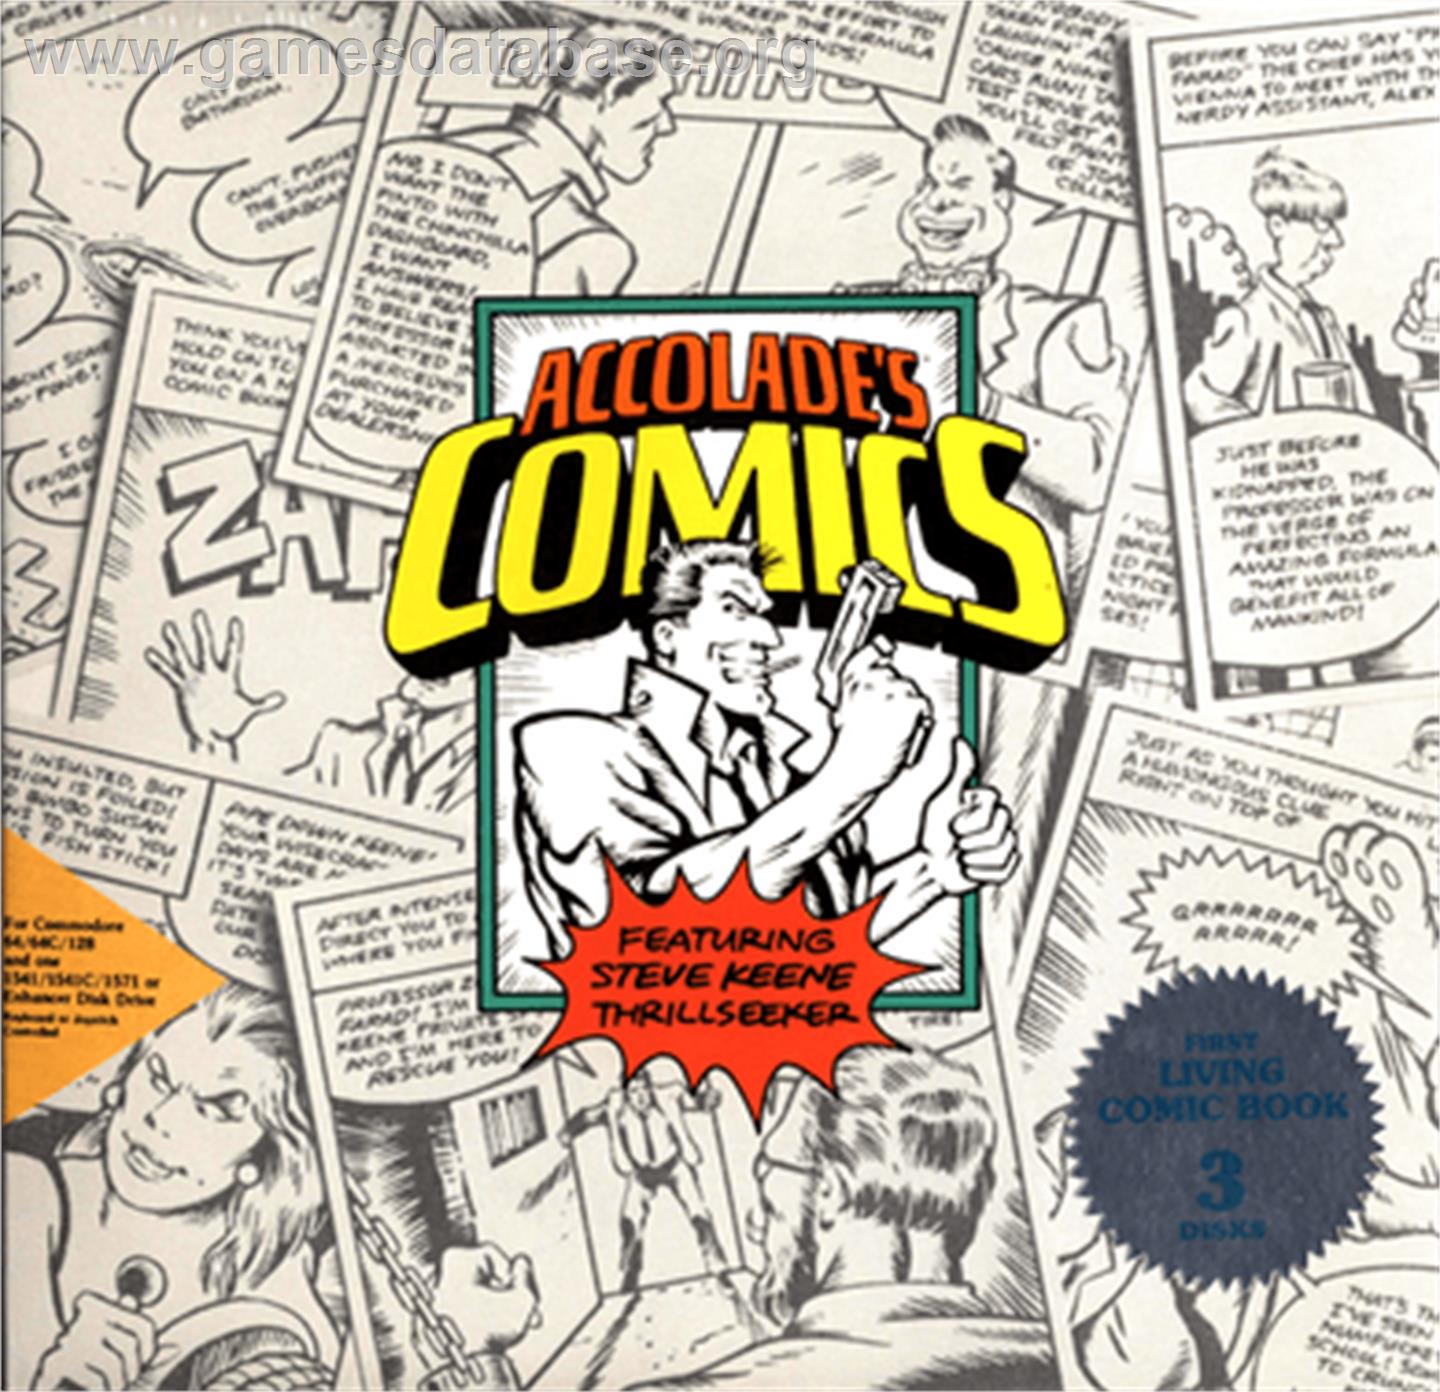 Accolade Comics: Steve Keene, Private Spy - Commodore 64 - Artwork - Box